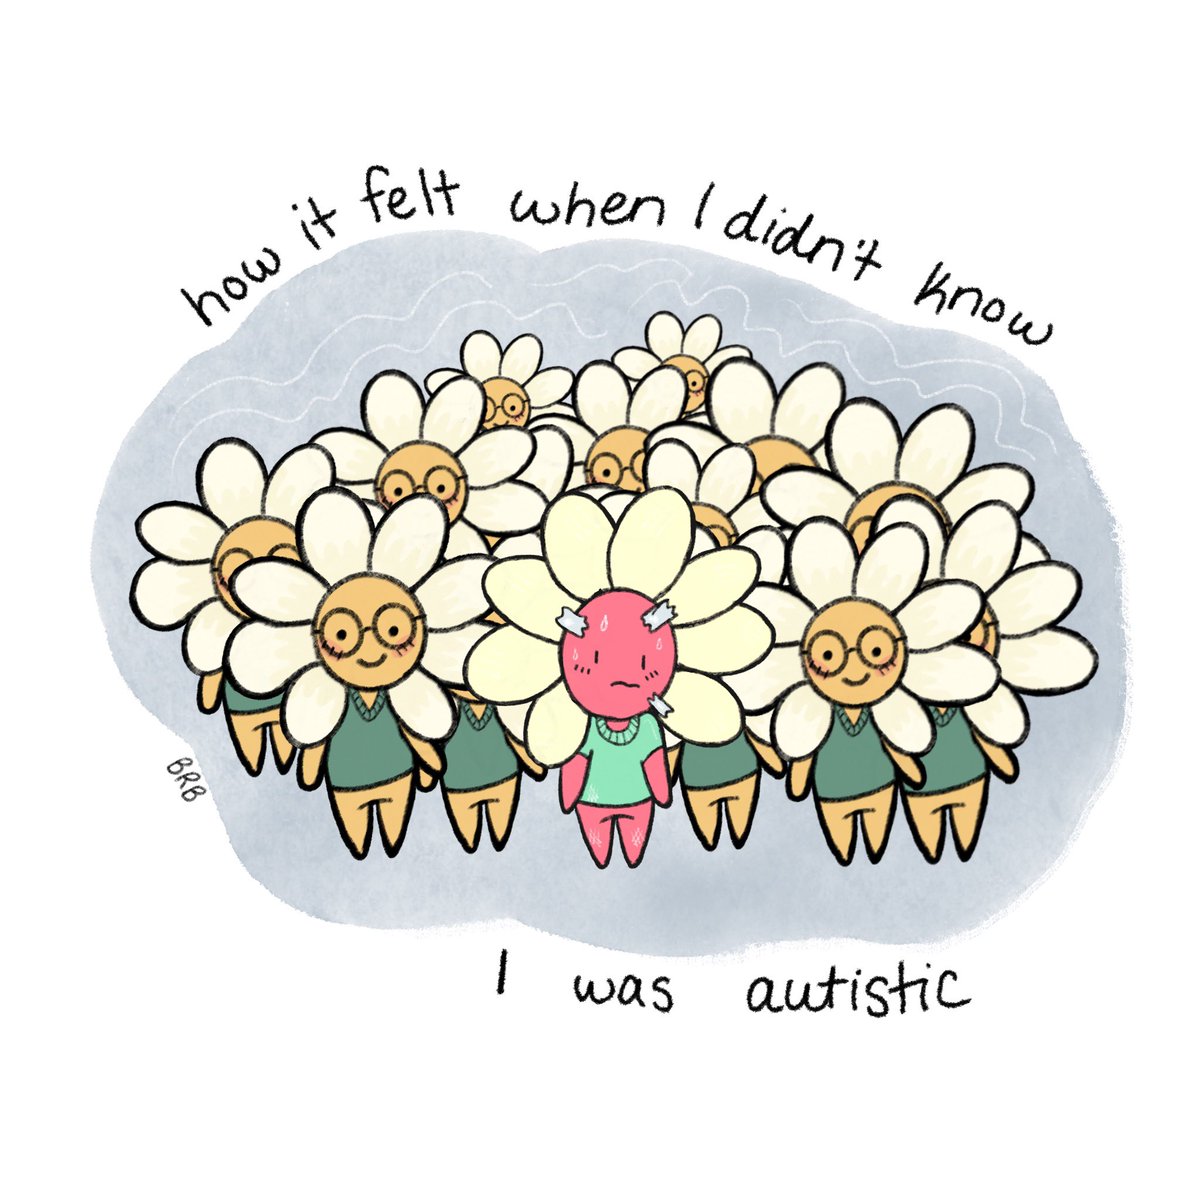 how it felt 

#ActuallyAutistic #AutisticArt